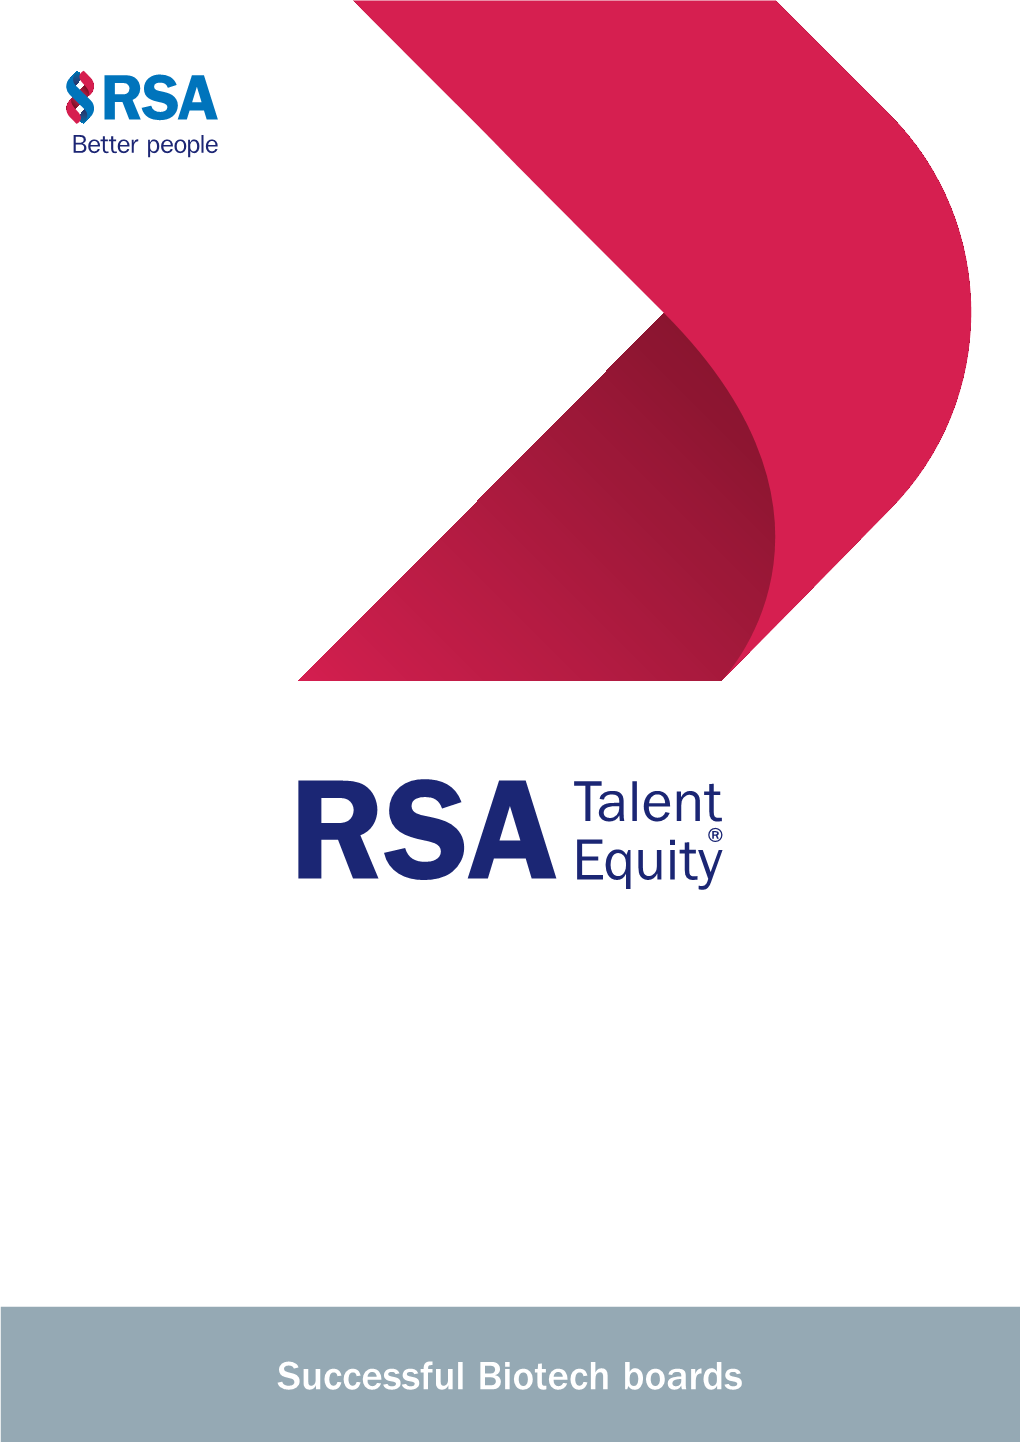 Successful Biotech Boards RSA Talent Equity®